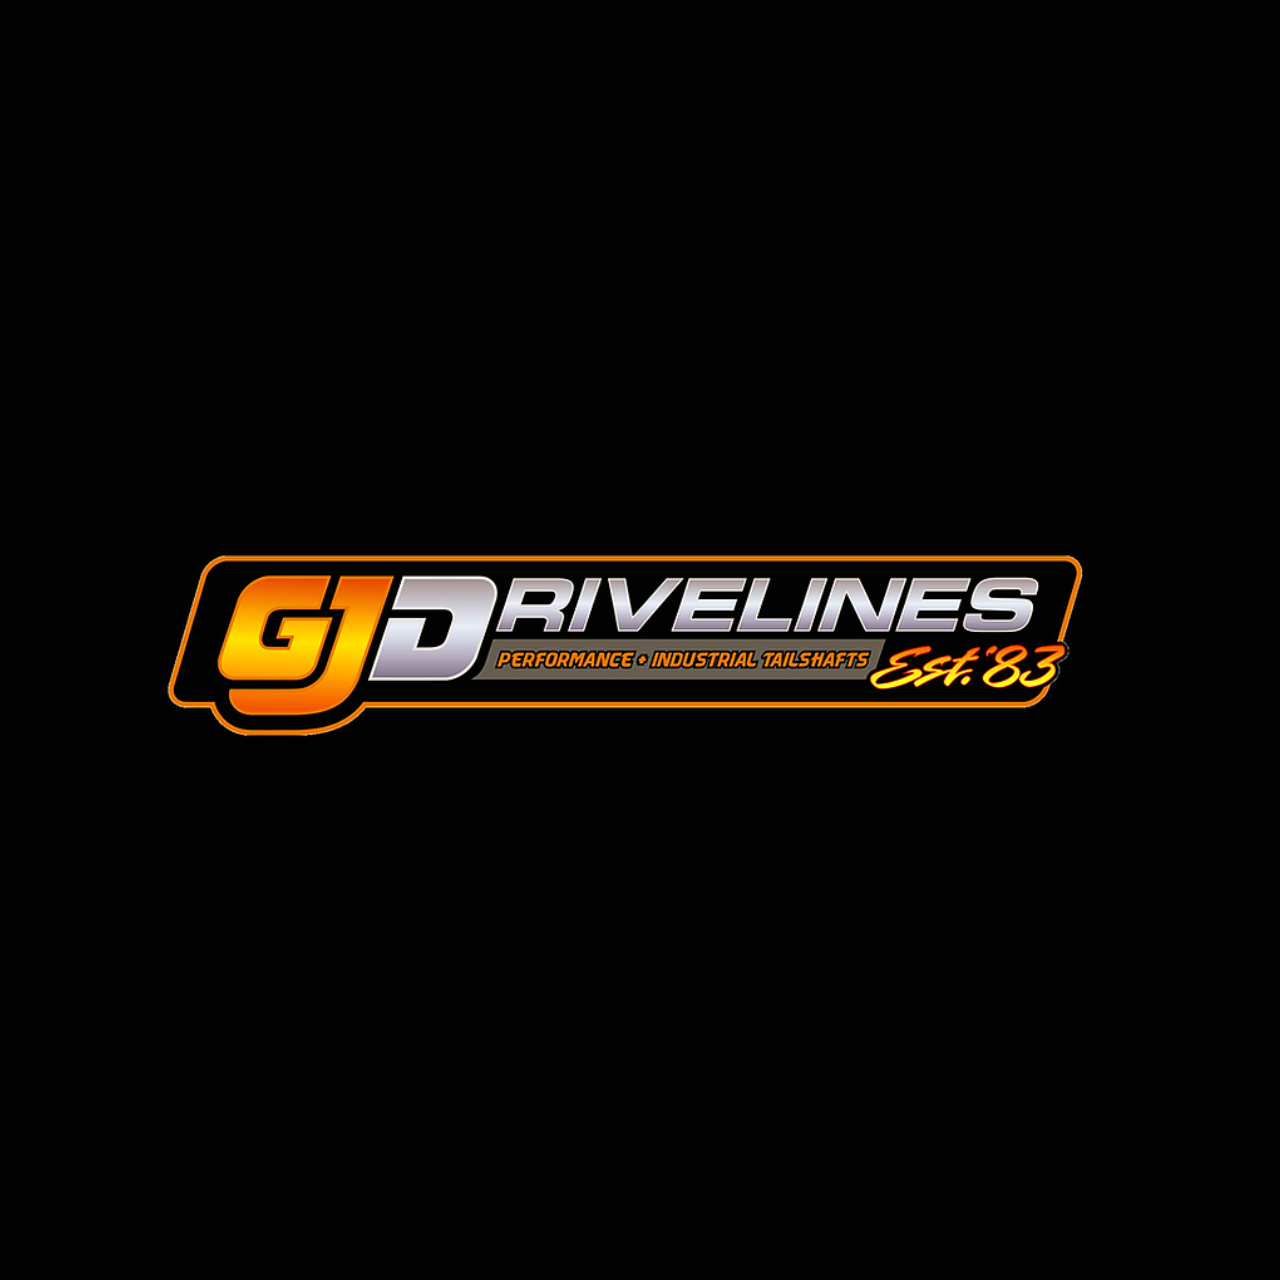 GJ Drivelines